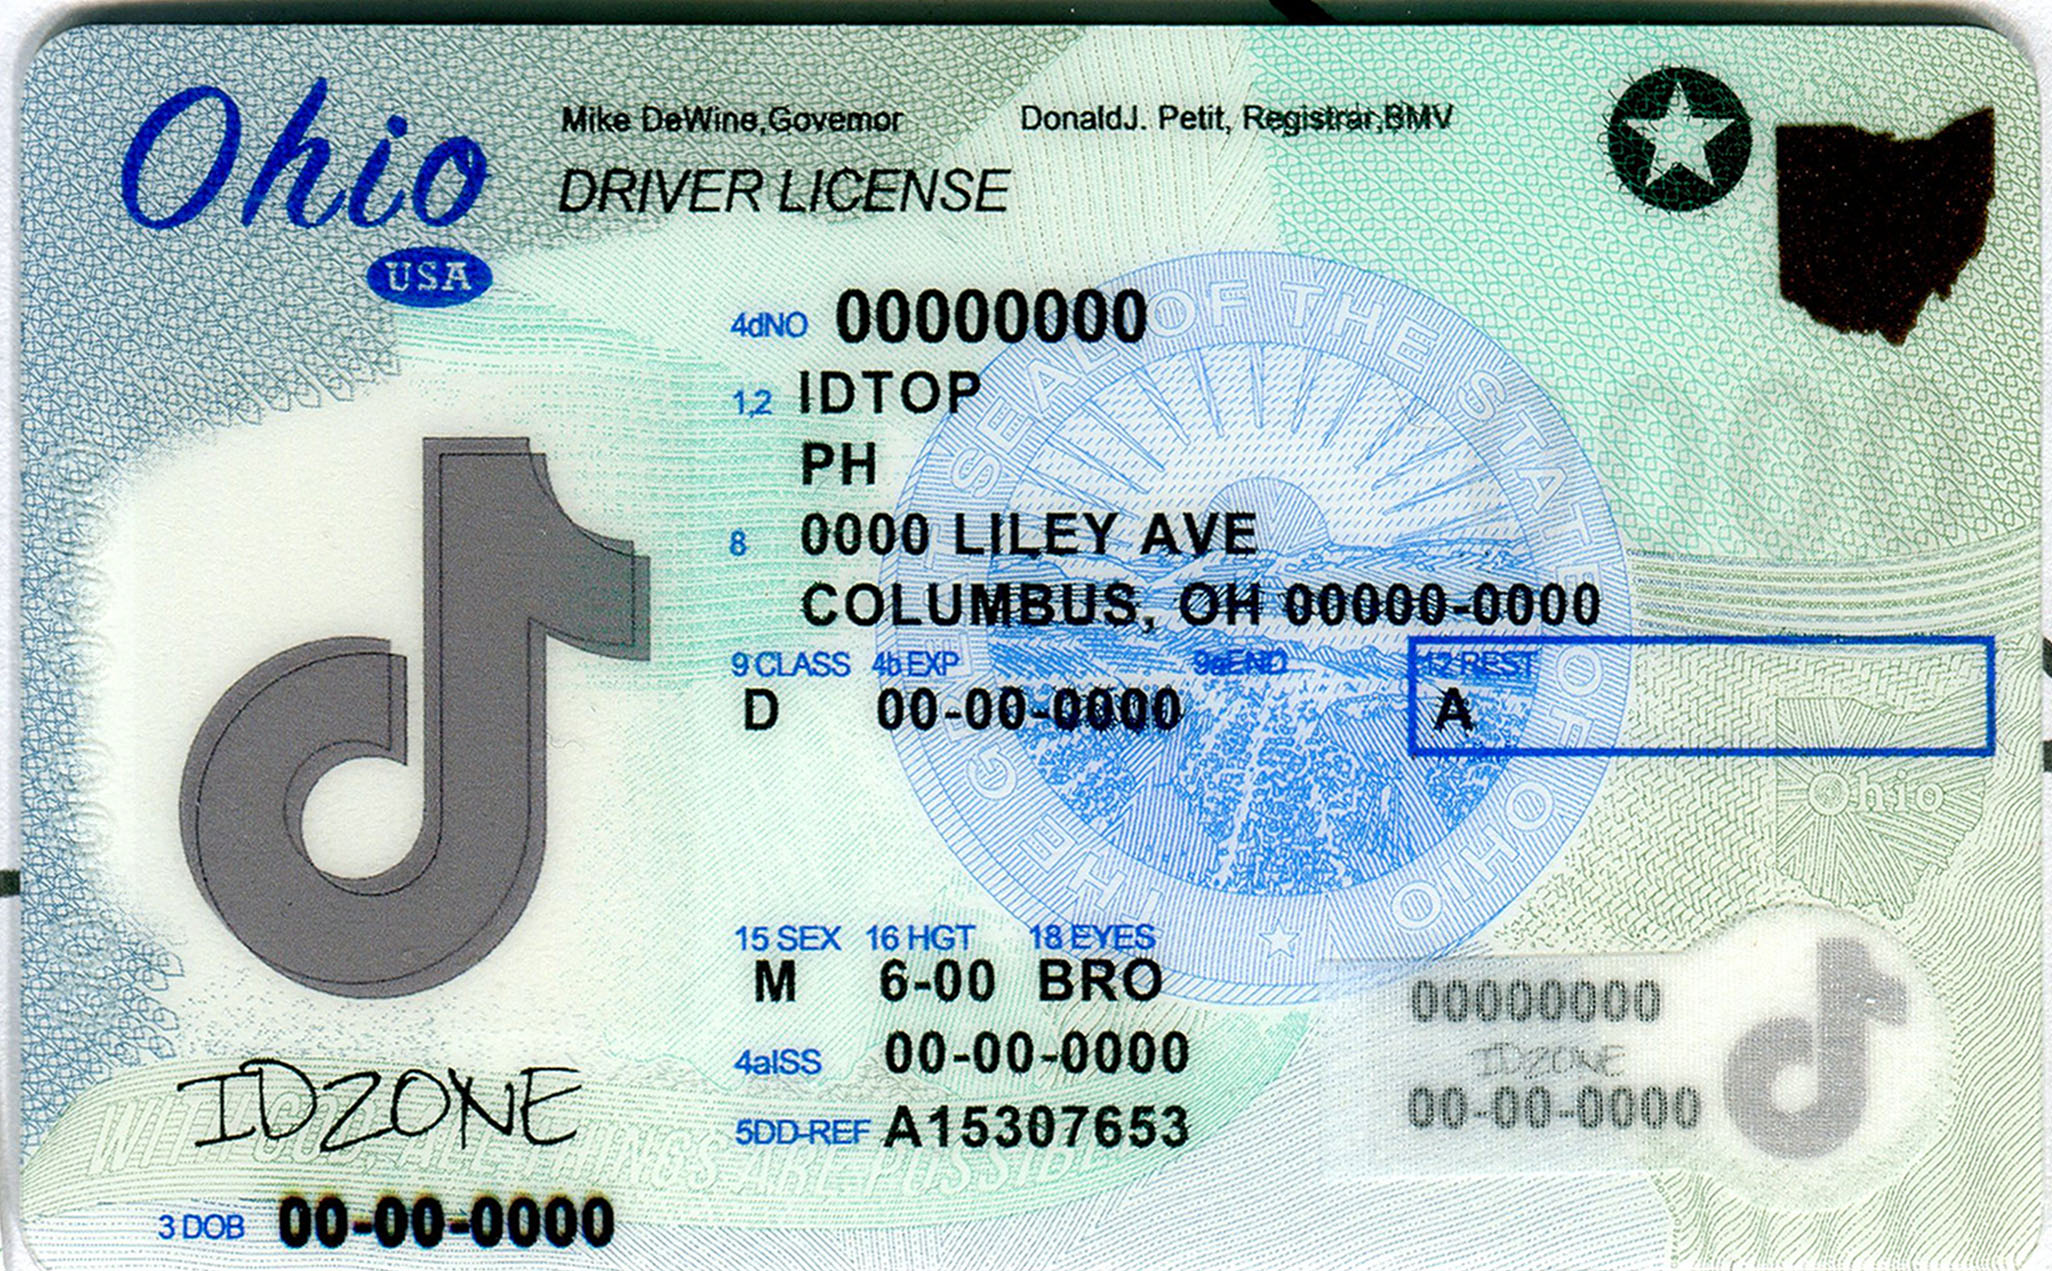 OHIO-New buy fake id